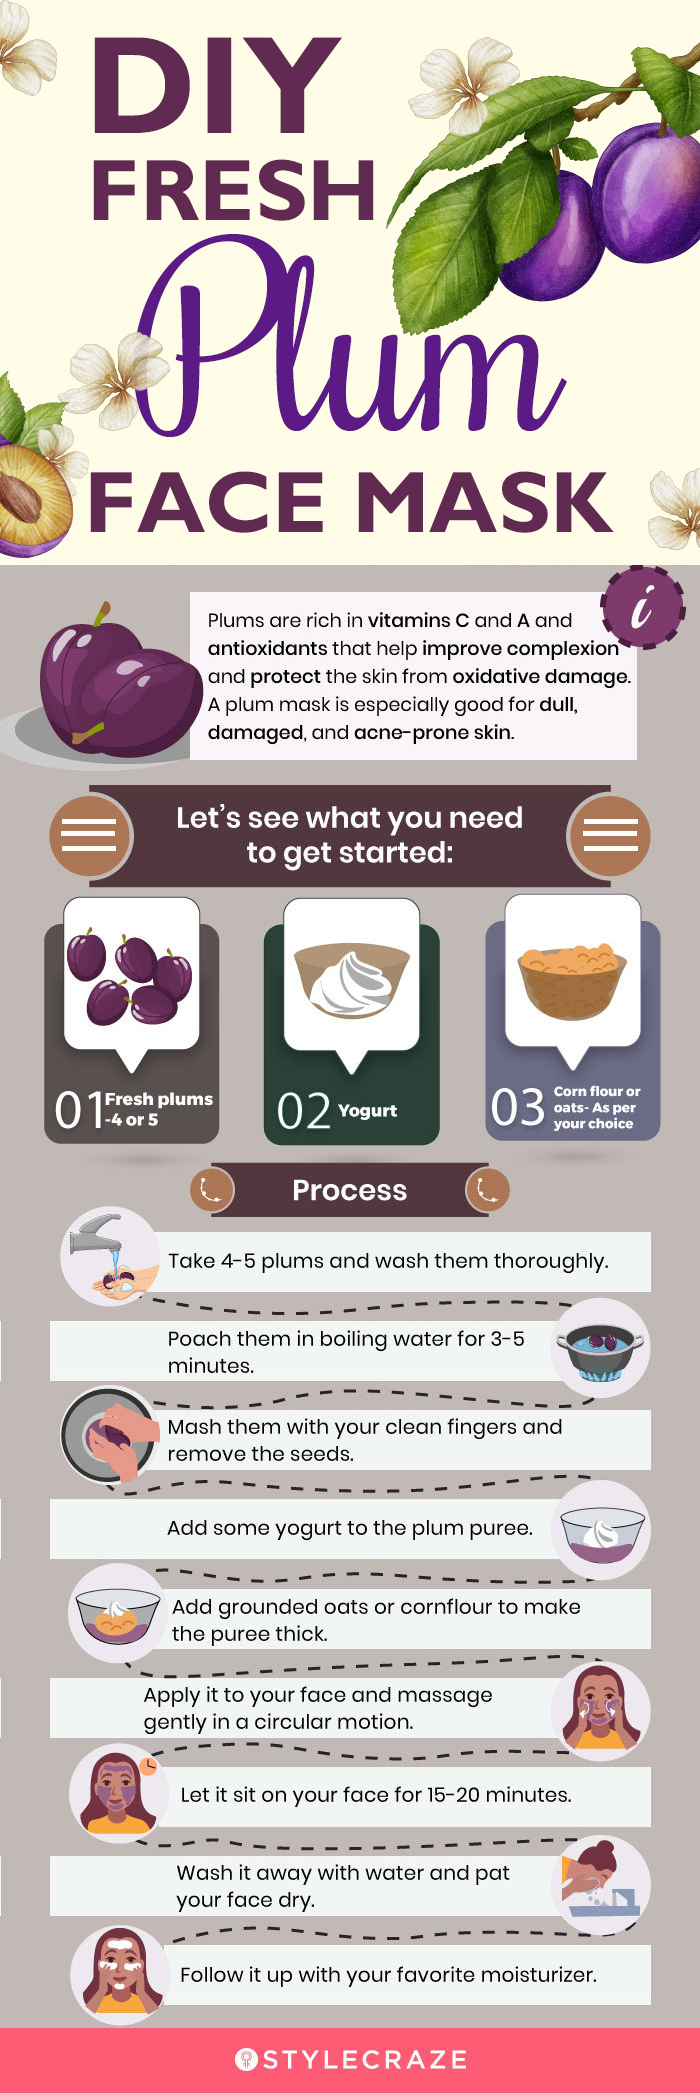 DIY fresh plum face mask (infographic)